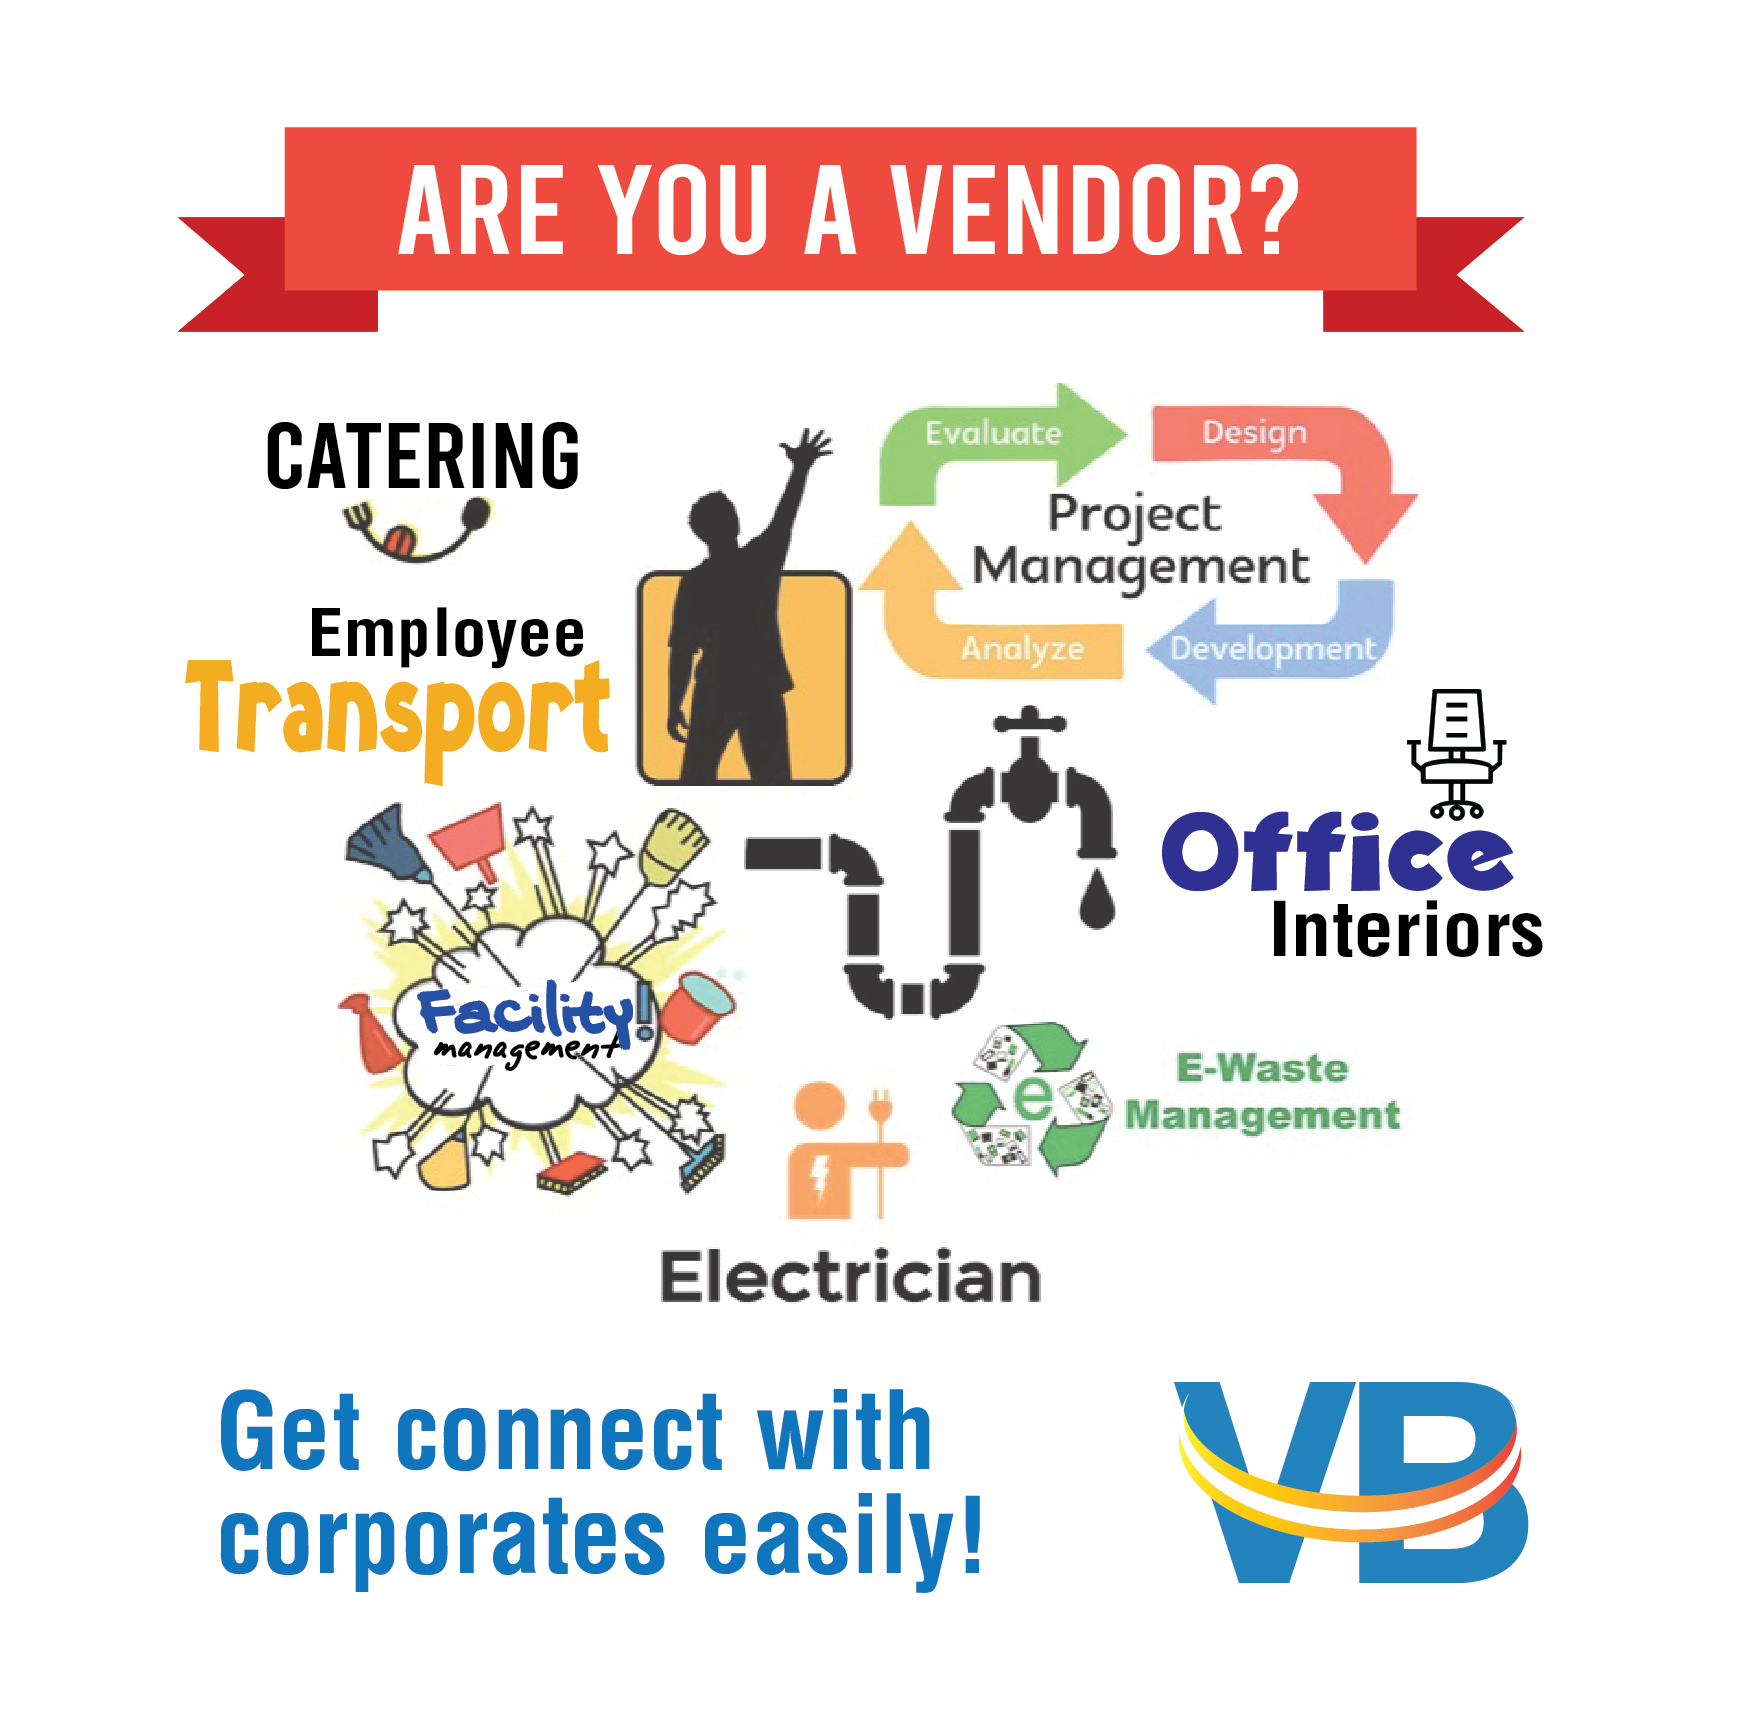 Are you a vendor to corporates